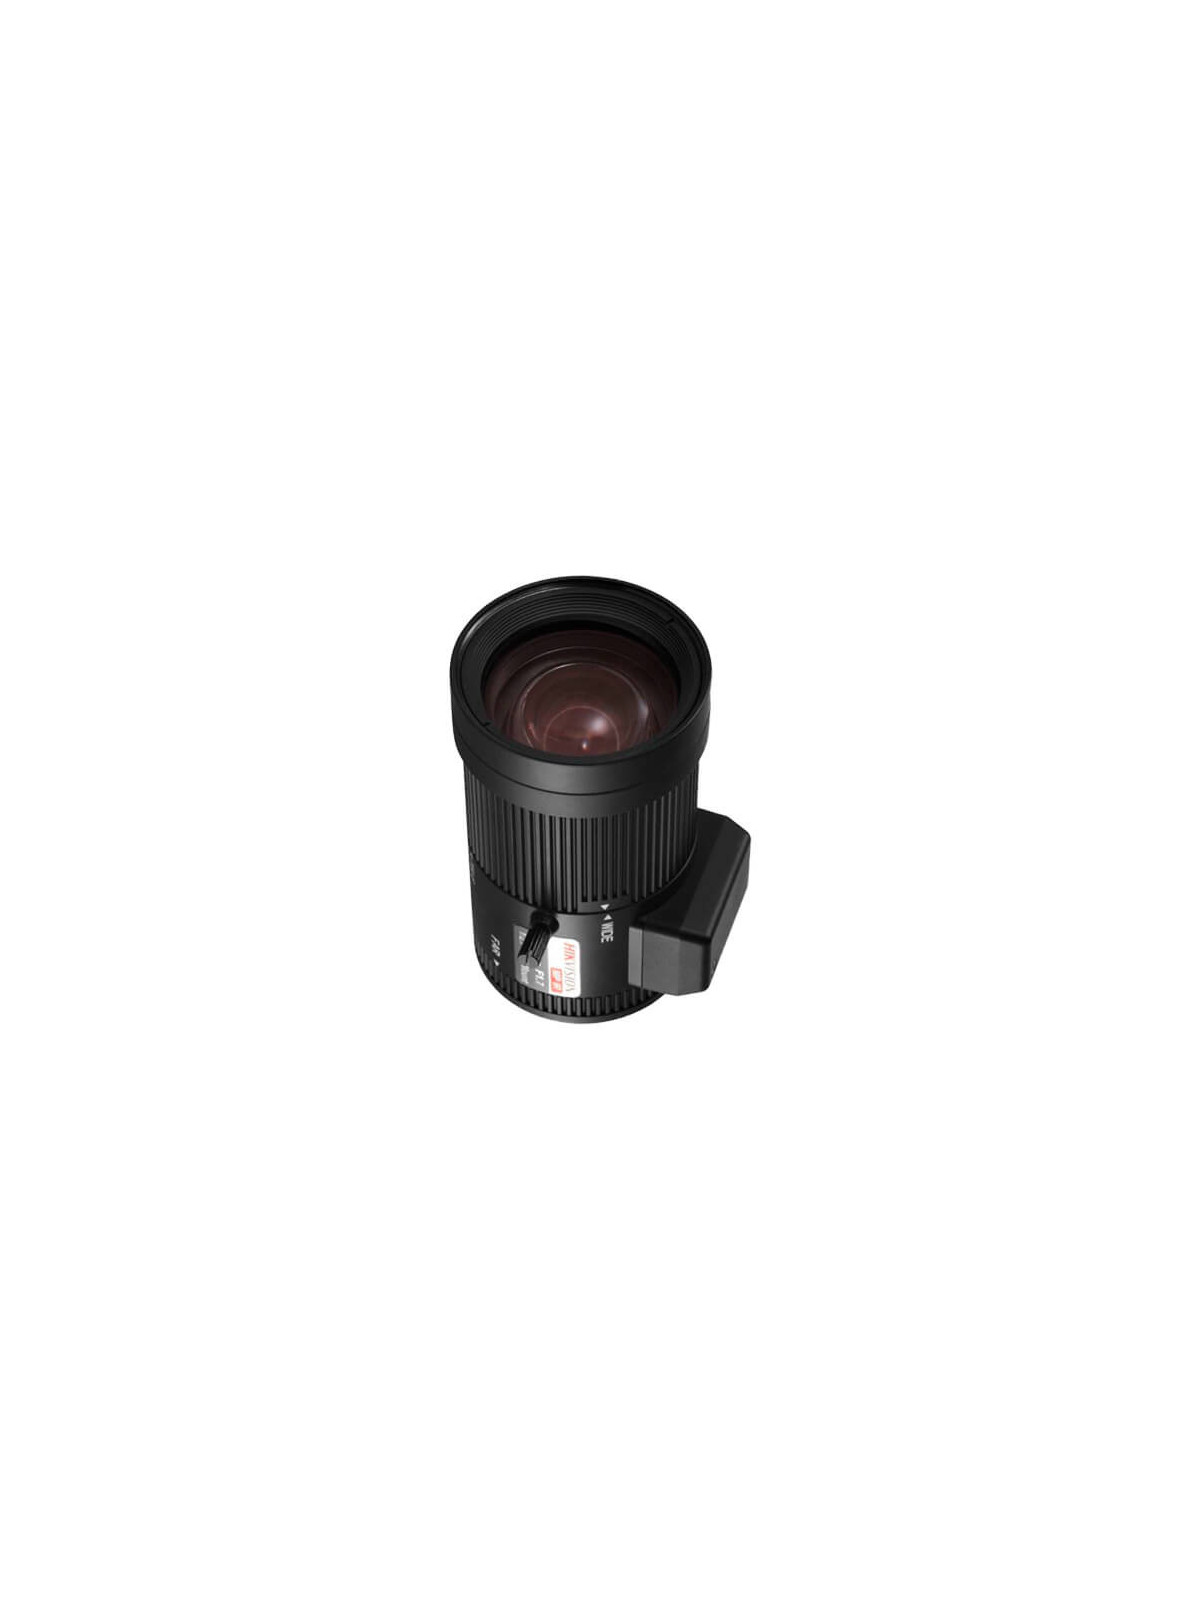 Óptica varifocal auto iris para cámara  5 - 50mm 3MP V0550D-MPIR